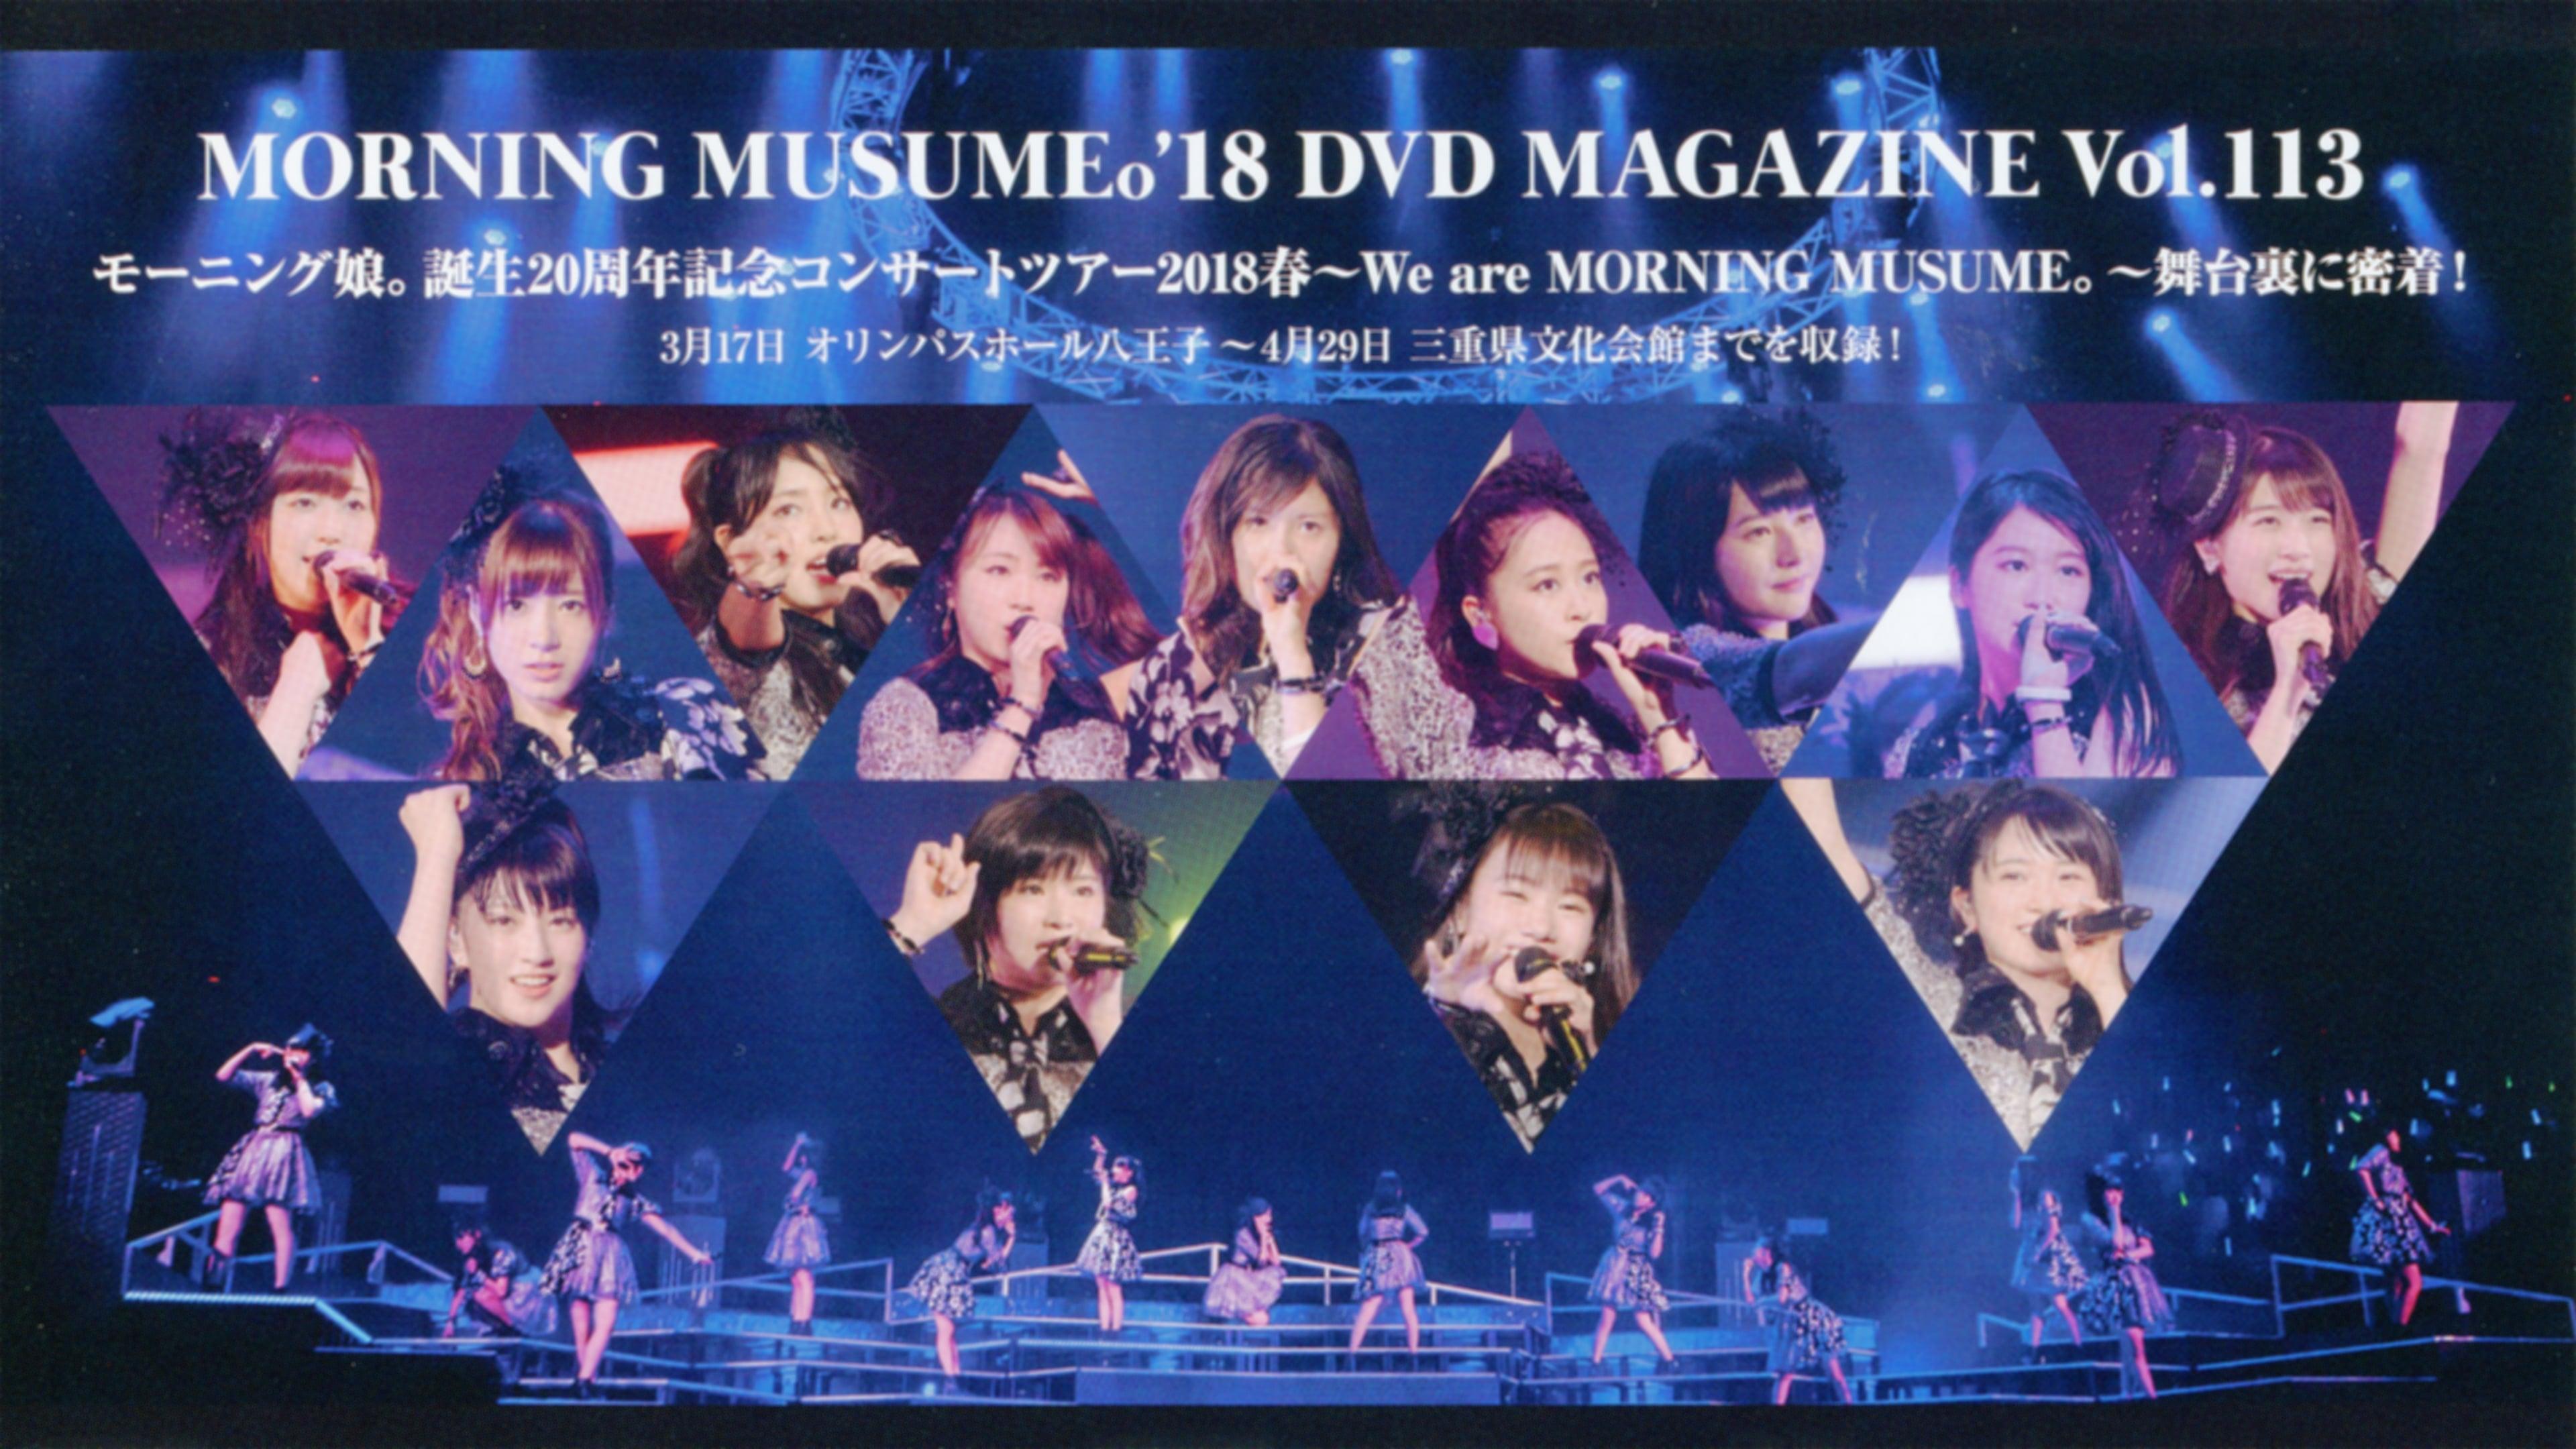 Morning Musume.'18 DVD Magazine Vol.113 backdrop